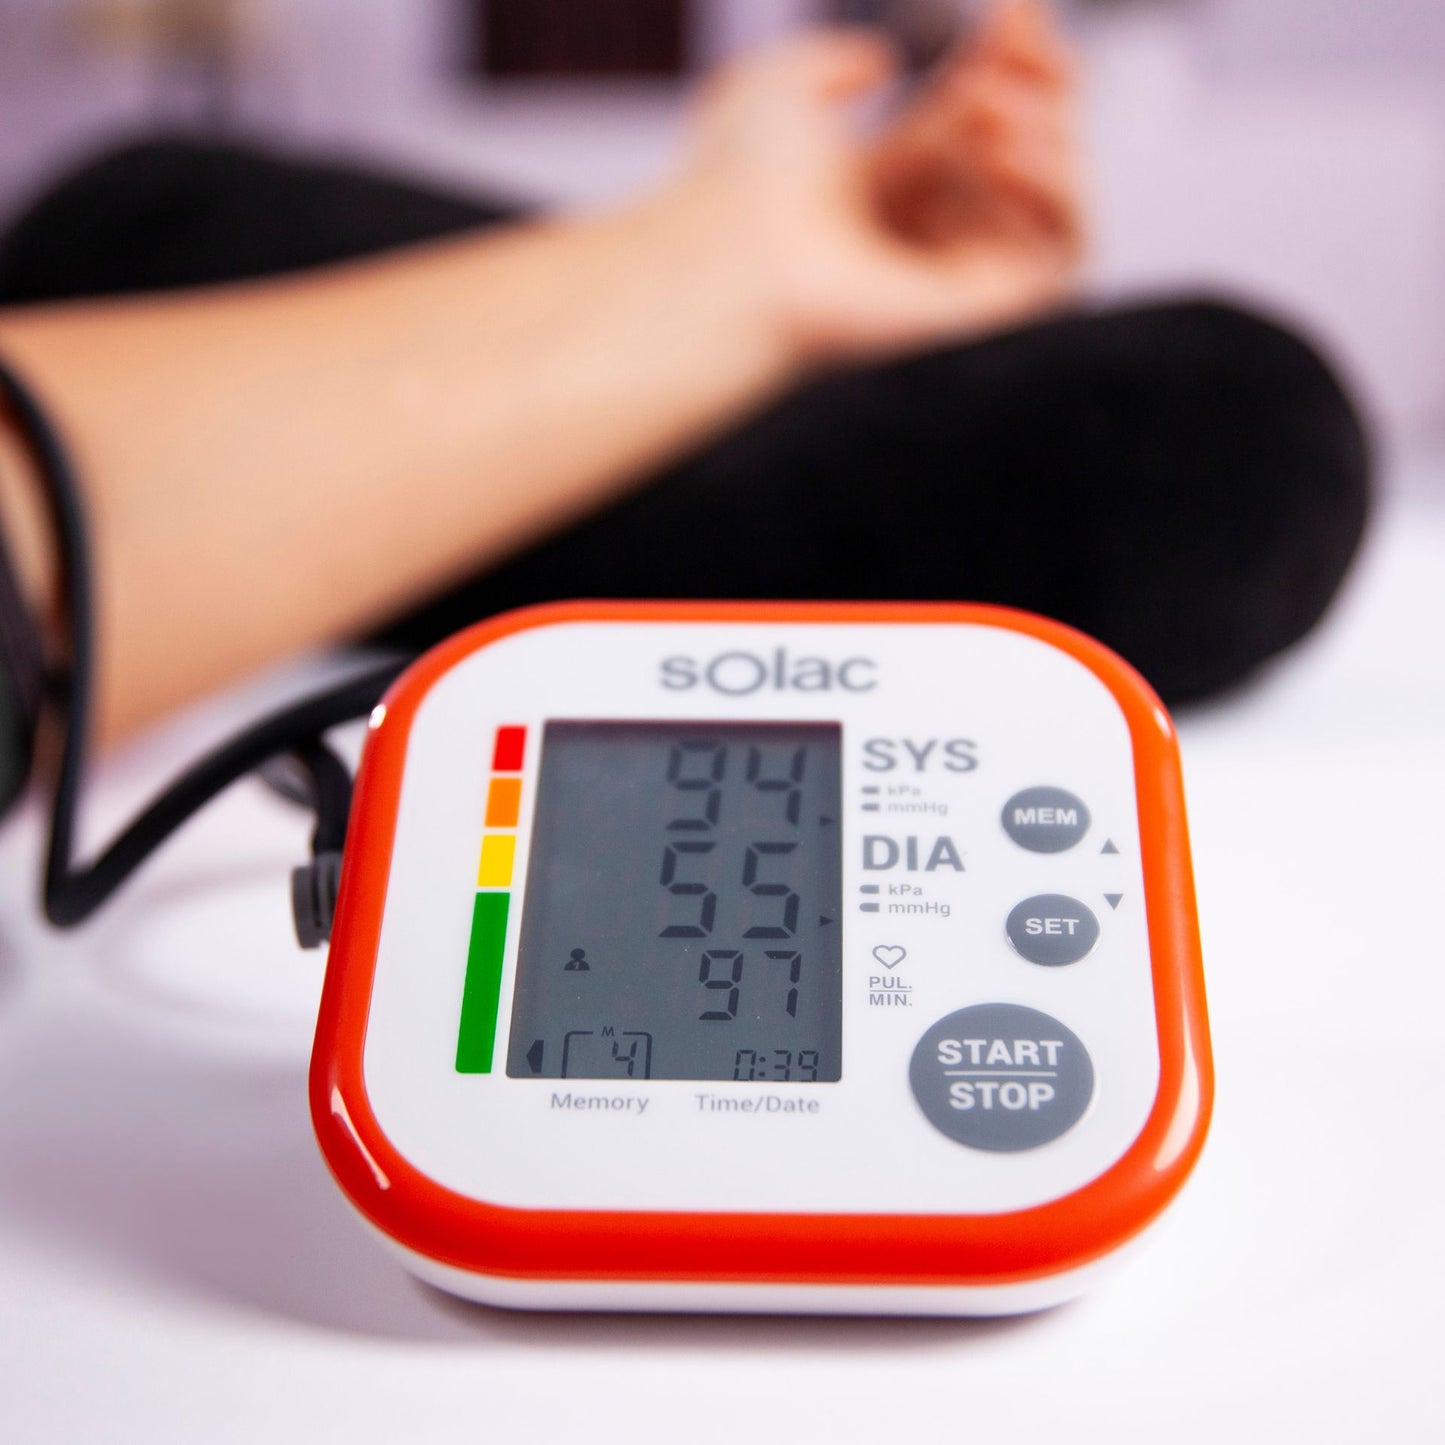 Monitor de pressão arterial Tensiotek+